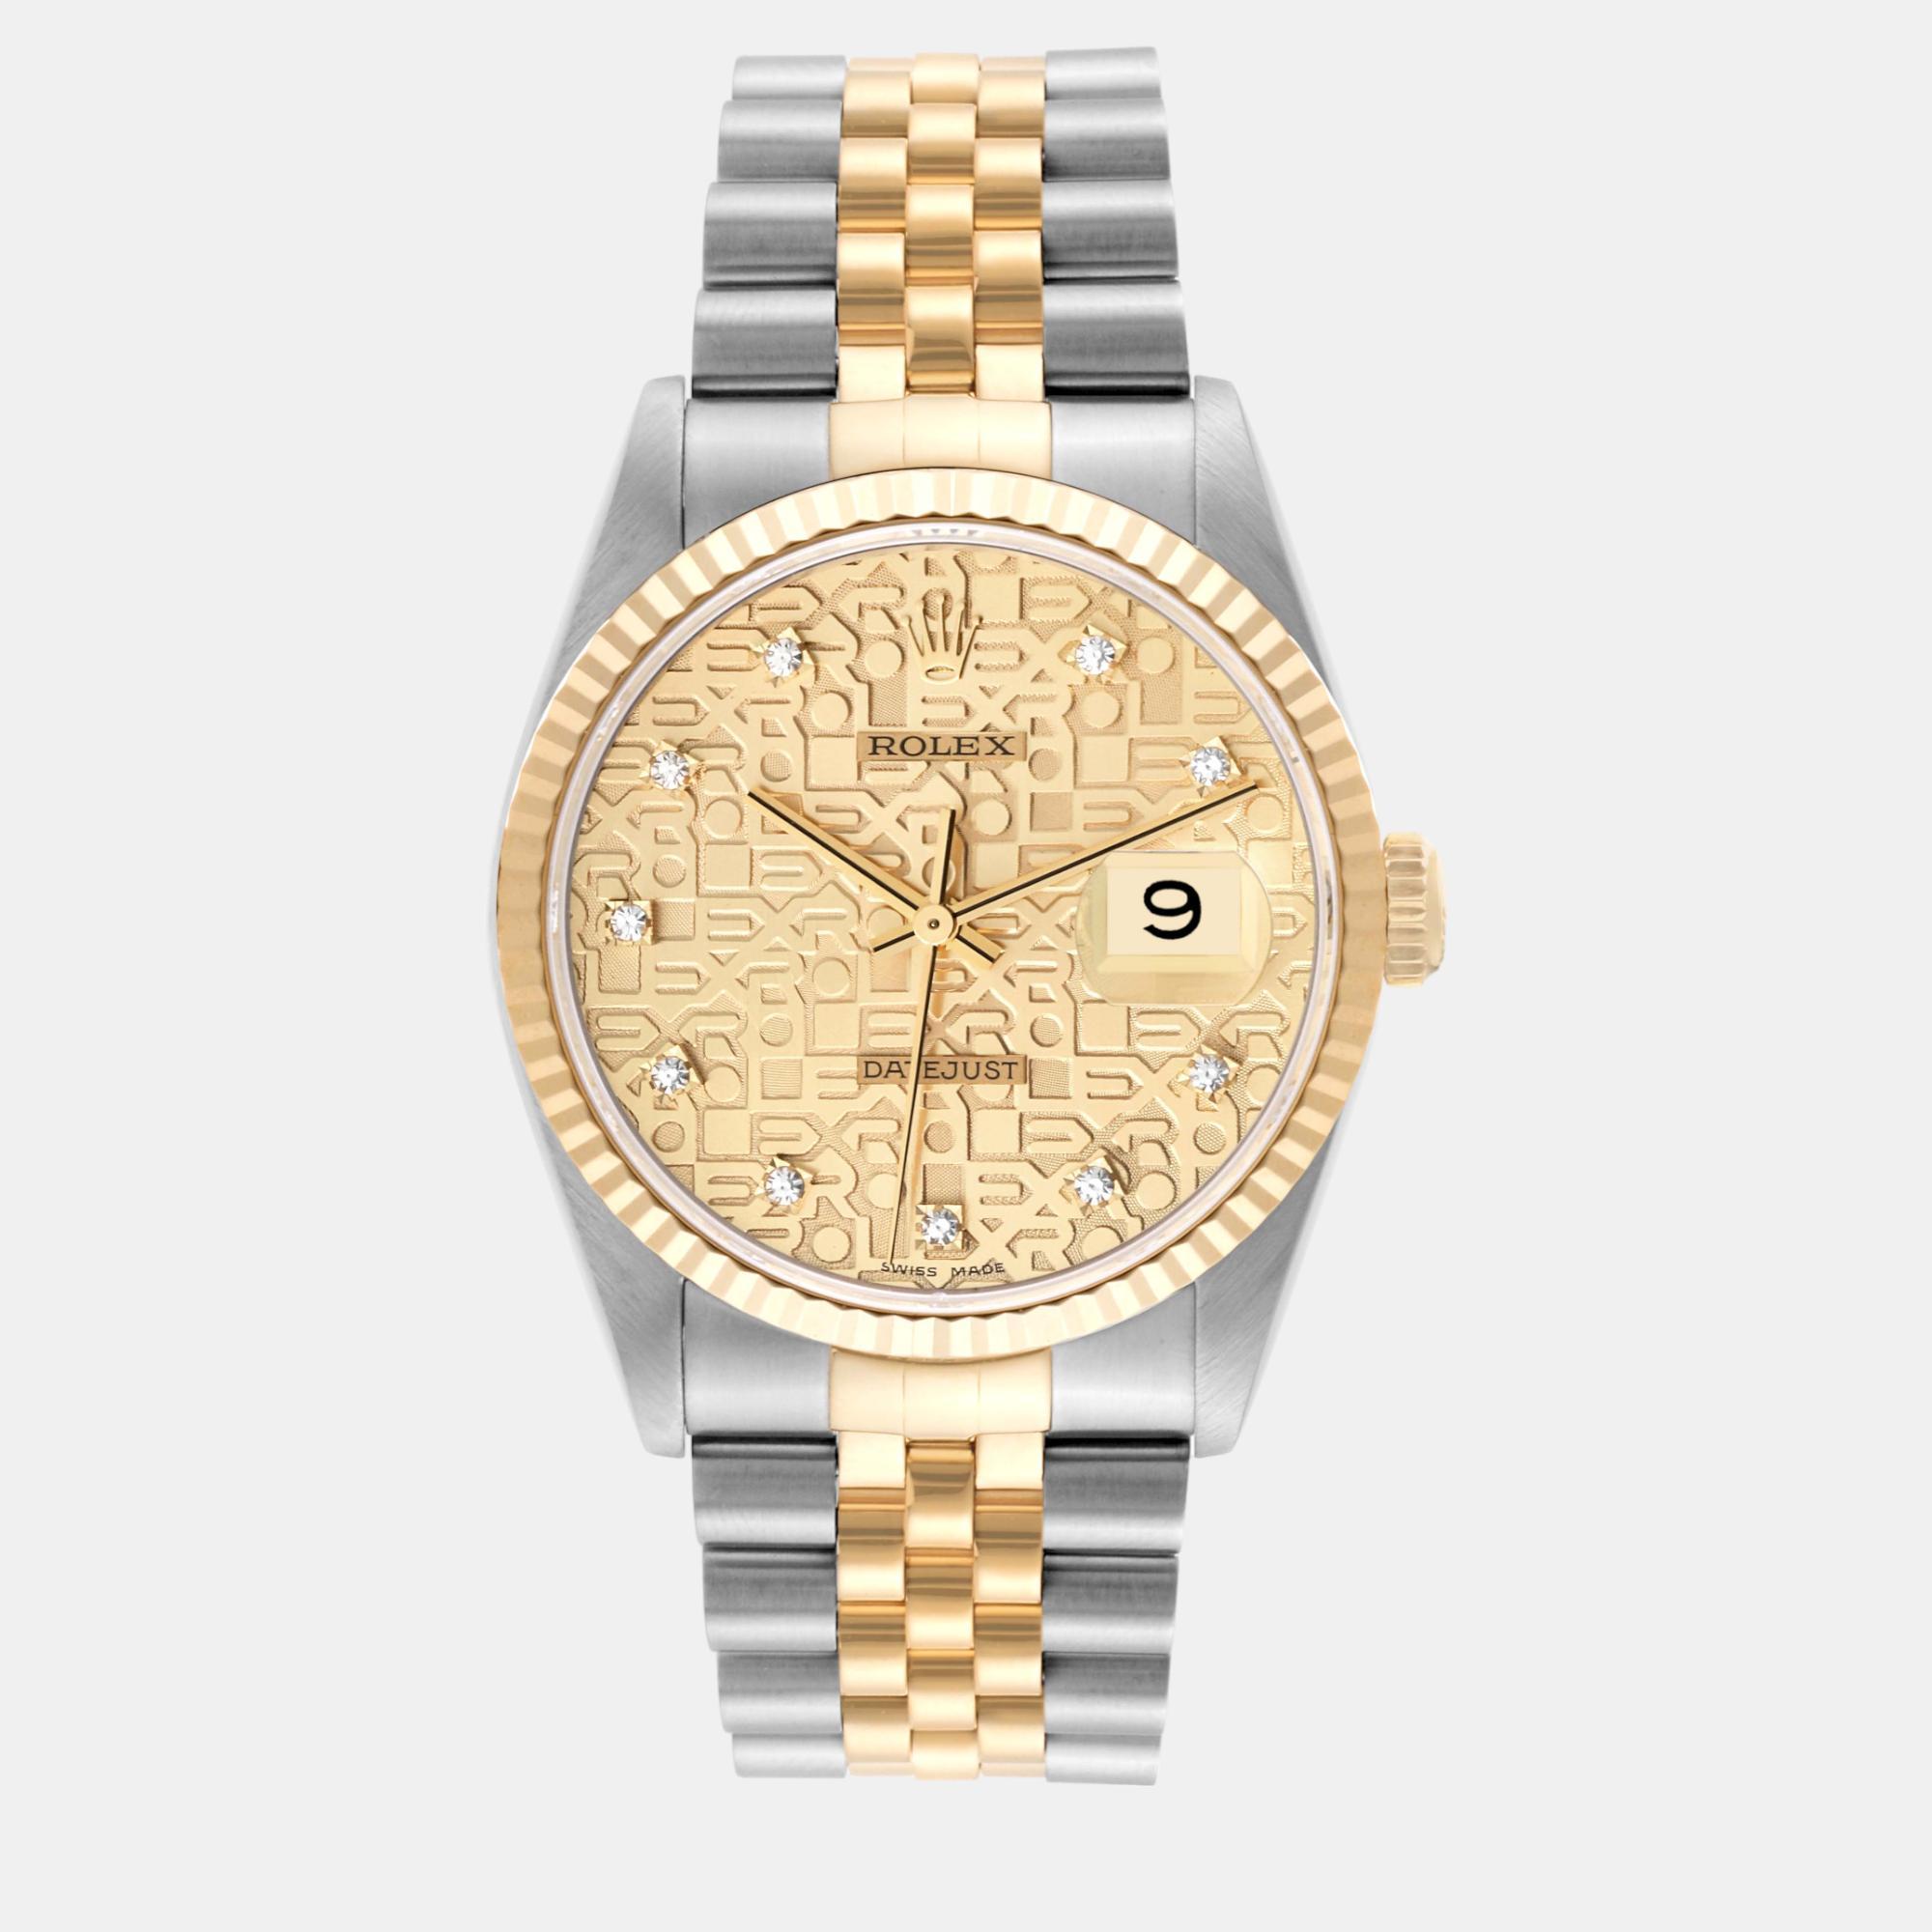 Rolex datejust anniversary diamond dial steel yellow gold men's watch 36.0 mm